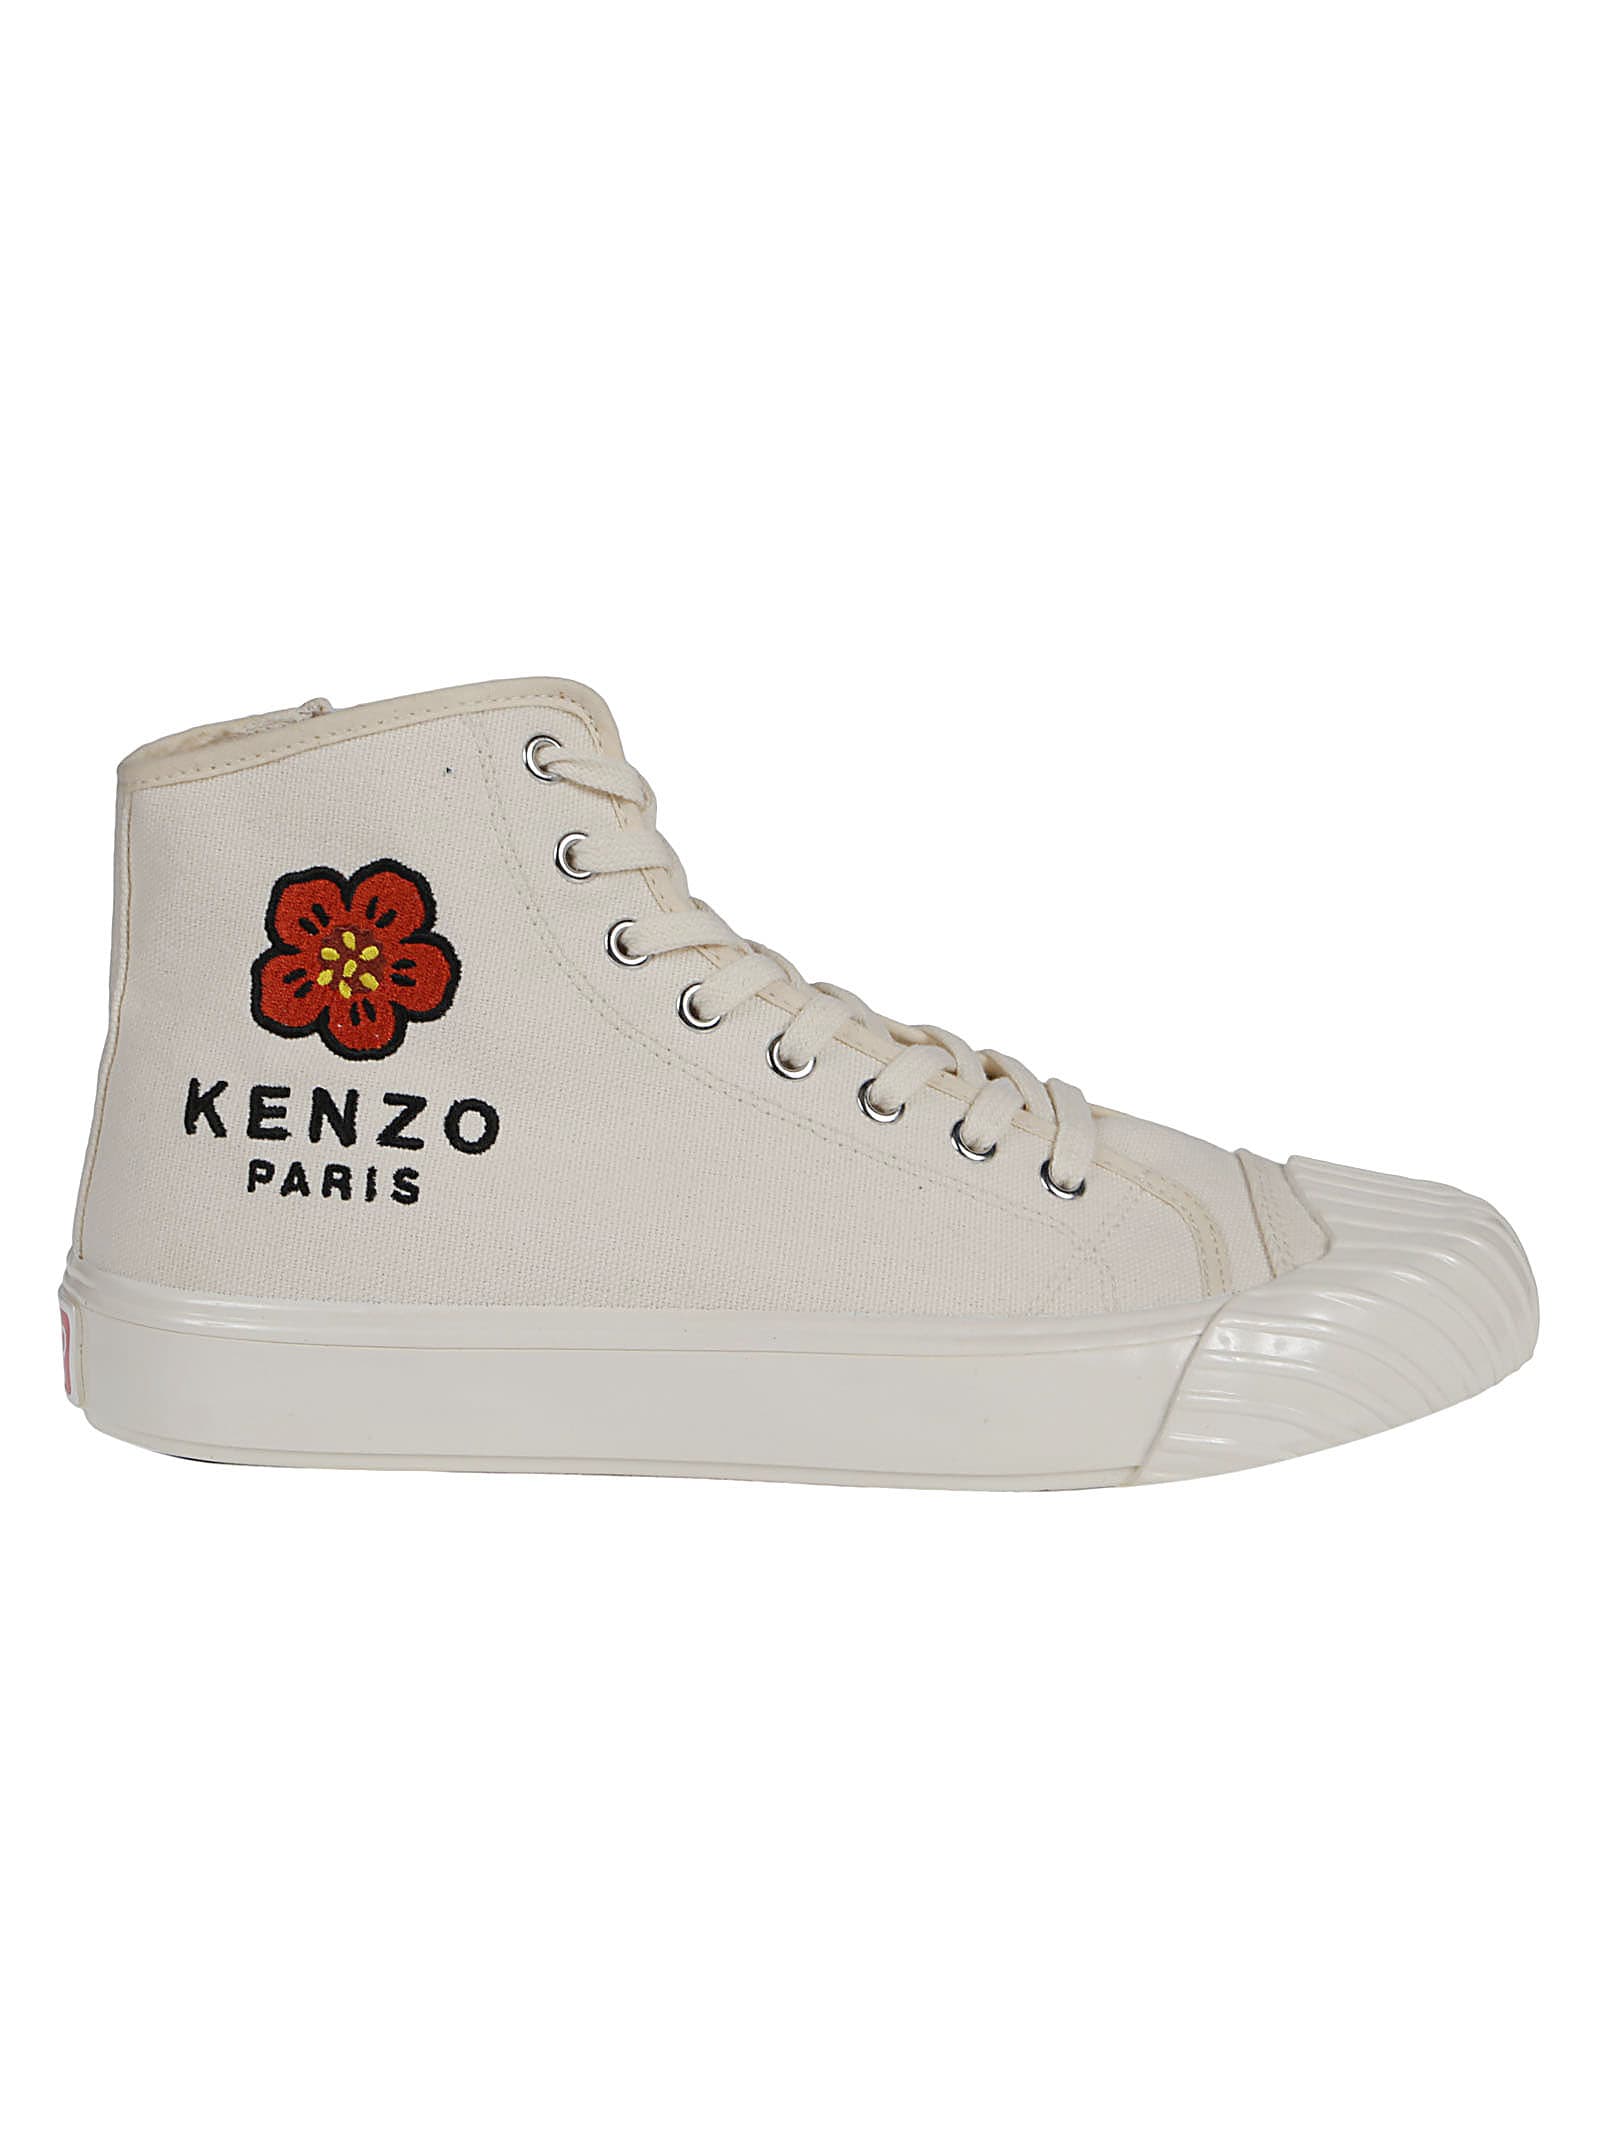 Kenzo School High Top Sneakers In Creme